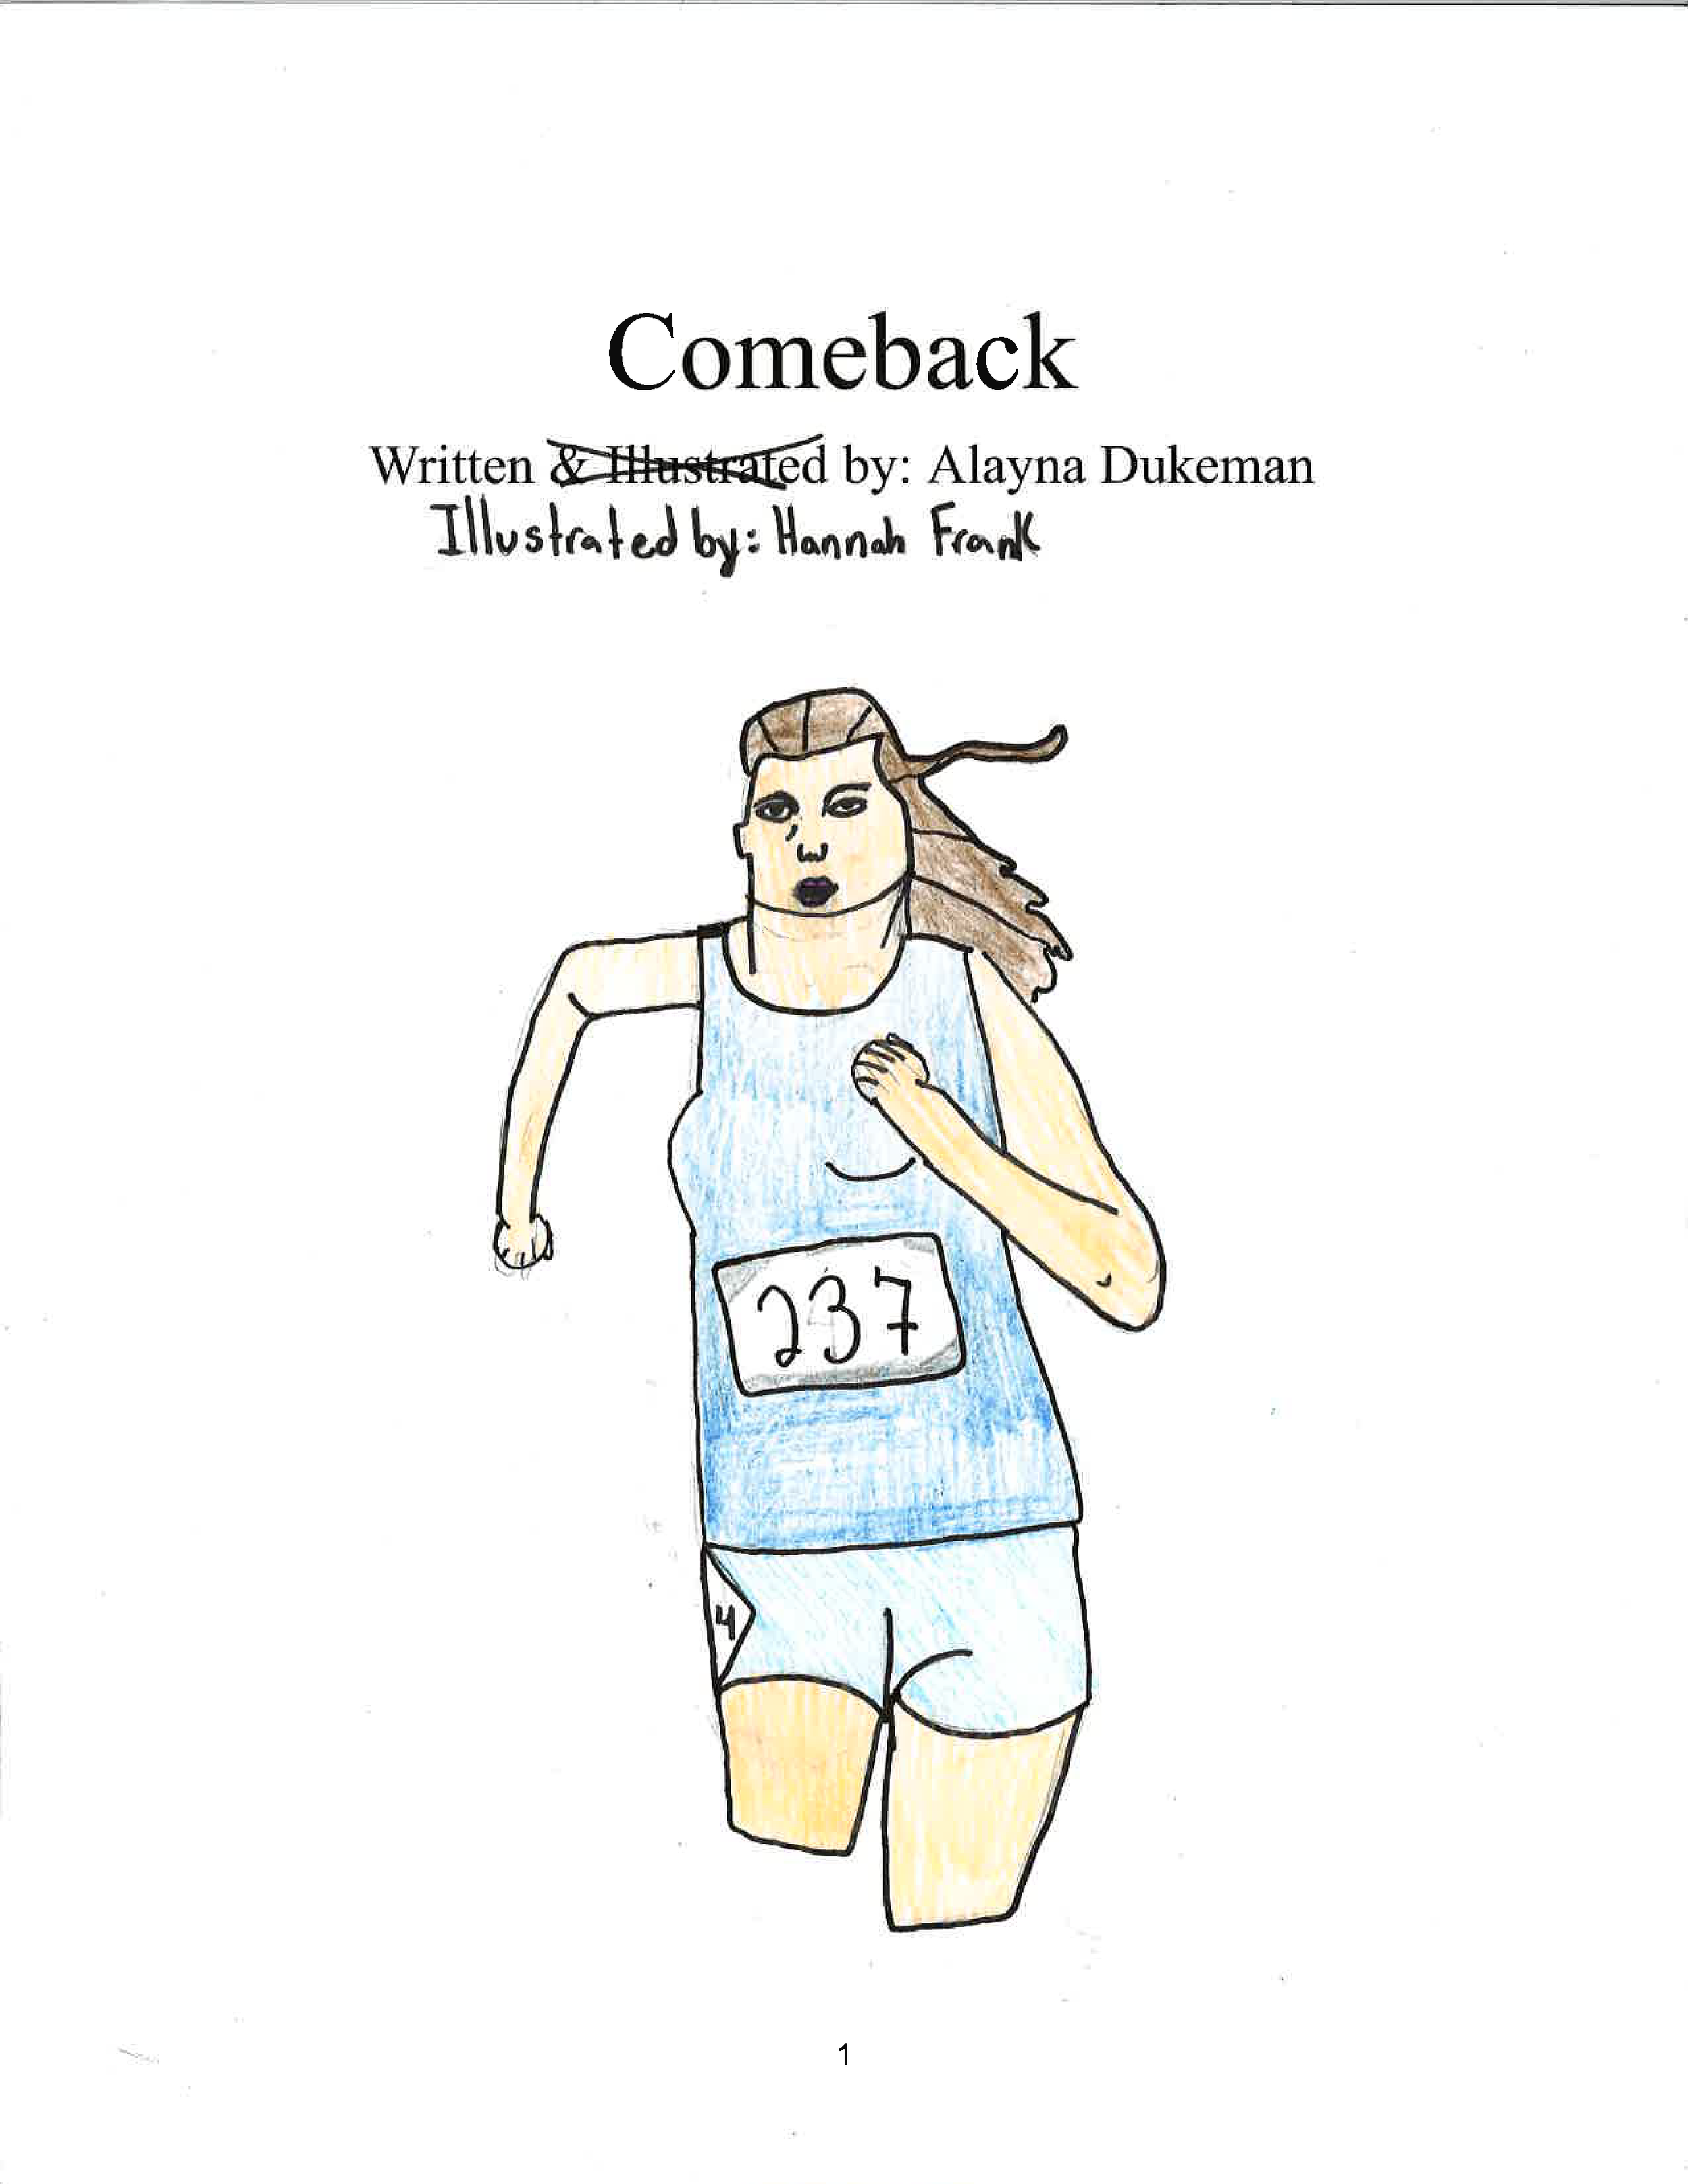 Illustration from "Comeback"